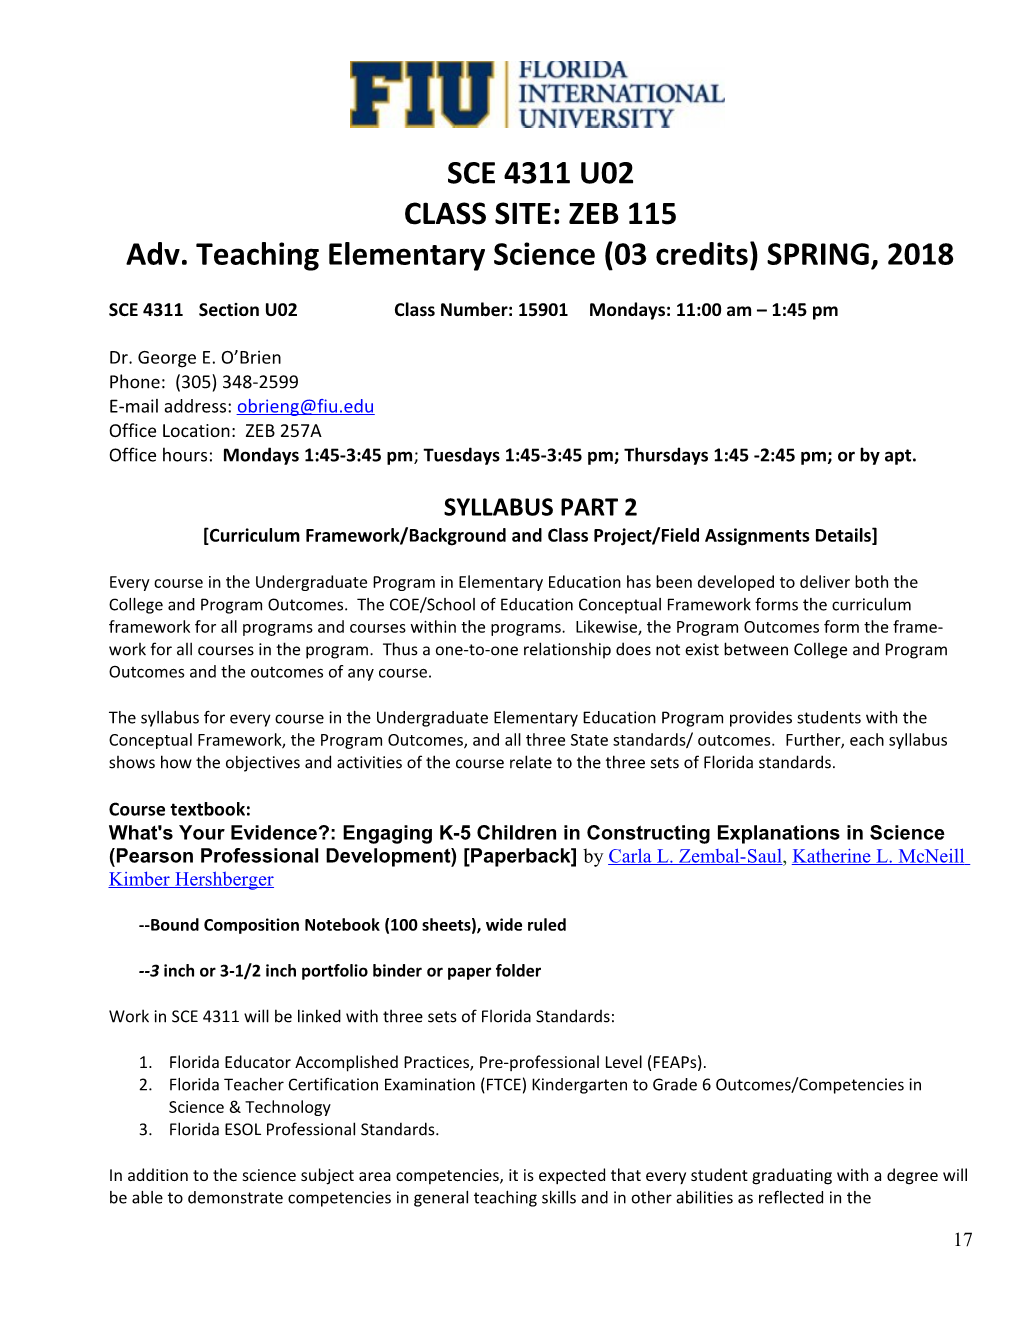 SCE 4311 U02 CLASS SITE: ZEB 115 Adv. Teaching Elementary Science(03 Credits) SPRING, 2018